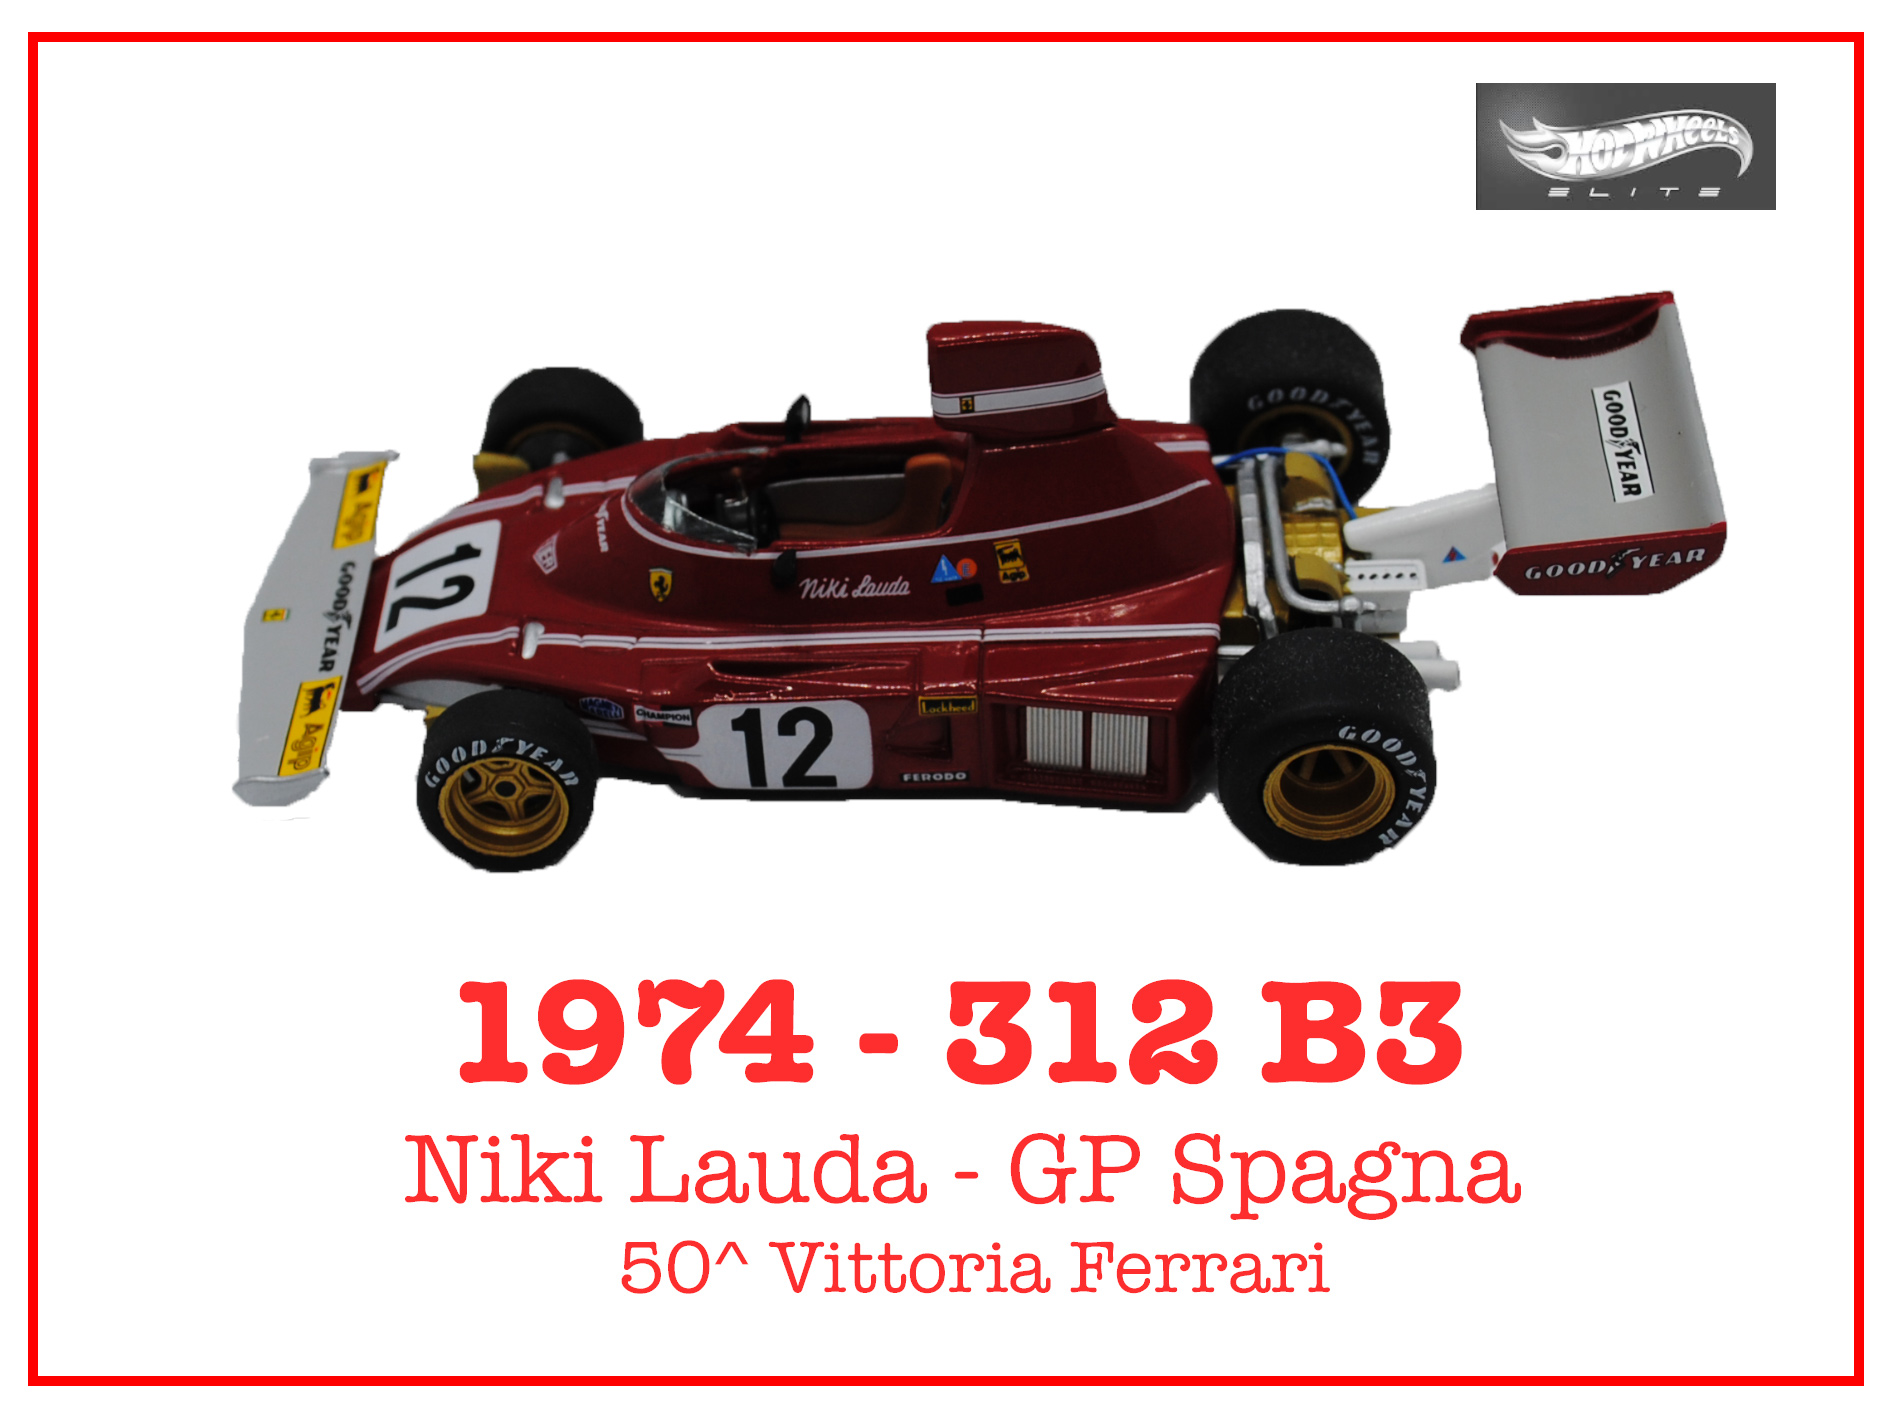 Immagine 312 B3 Niki Lauda GP Spain vittoria Ferrari 50